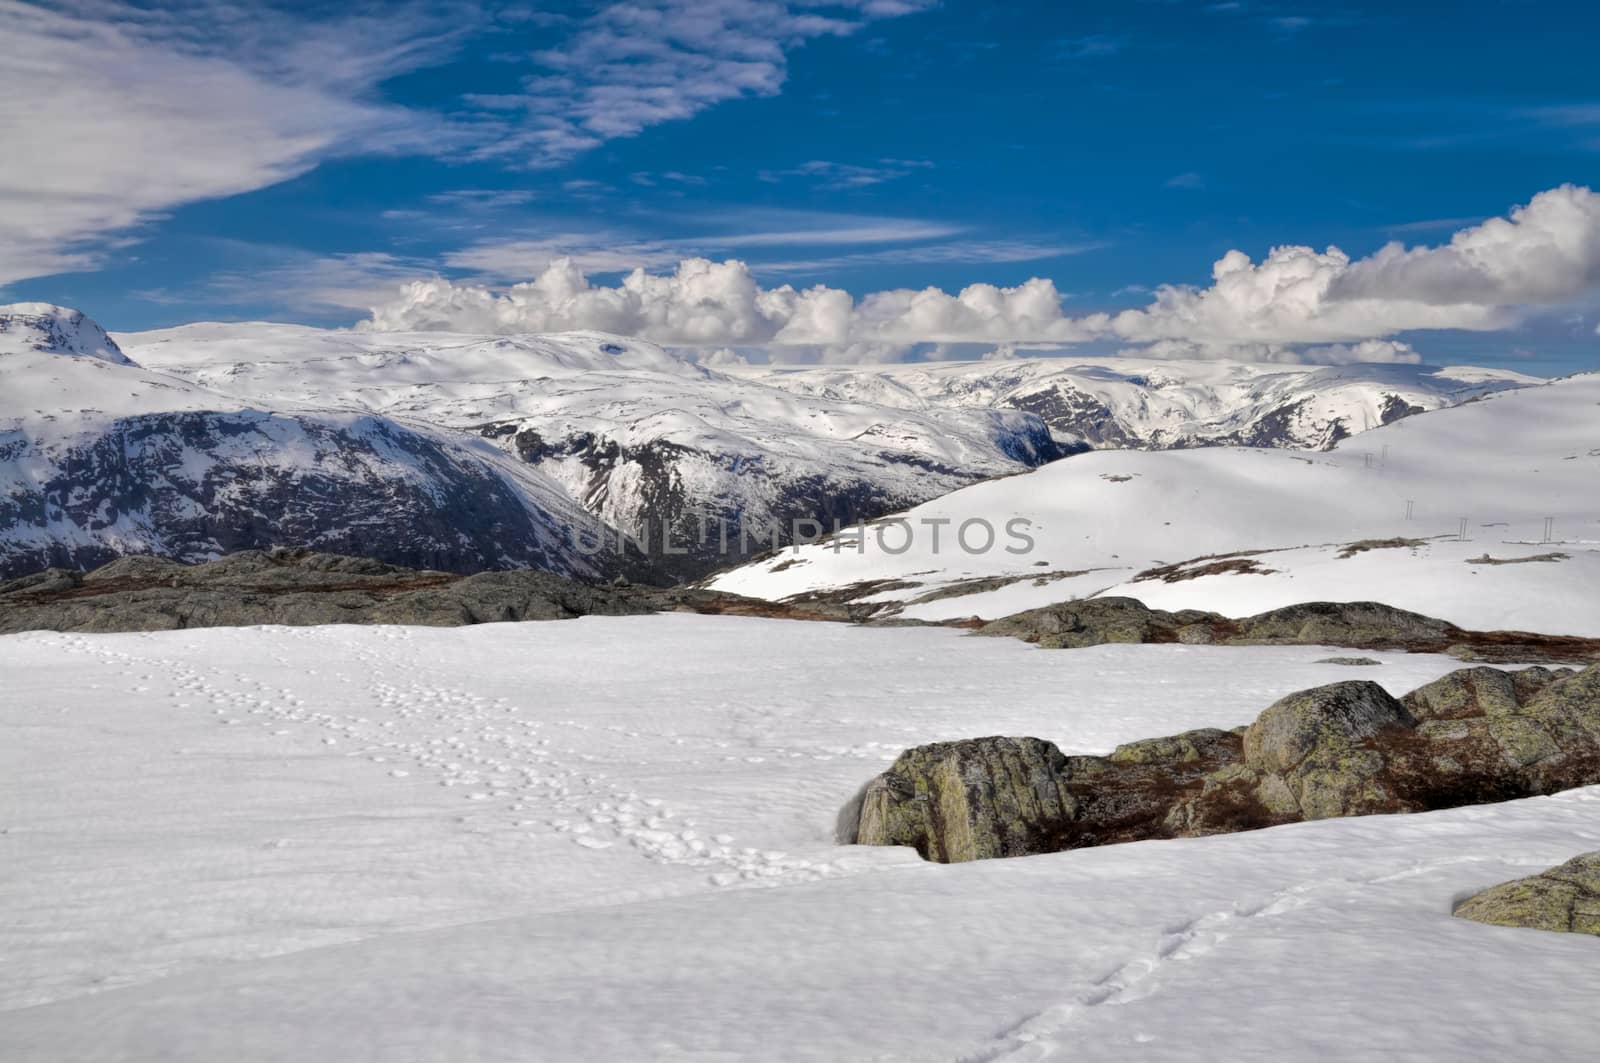 Mossy rocks peeking out of snow near Trolltunga, Norway